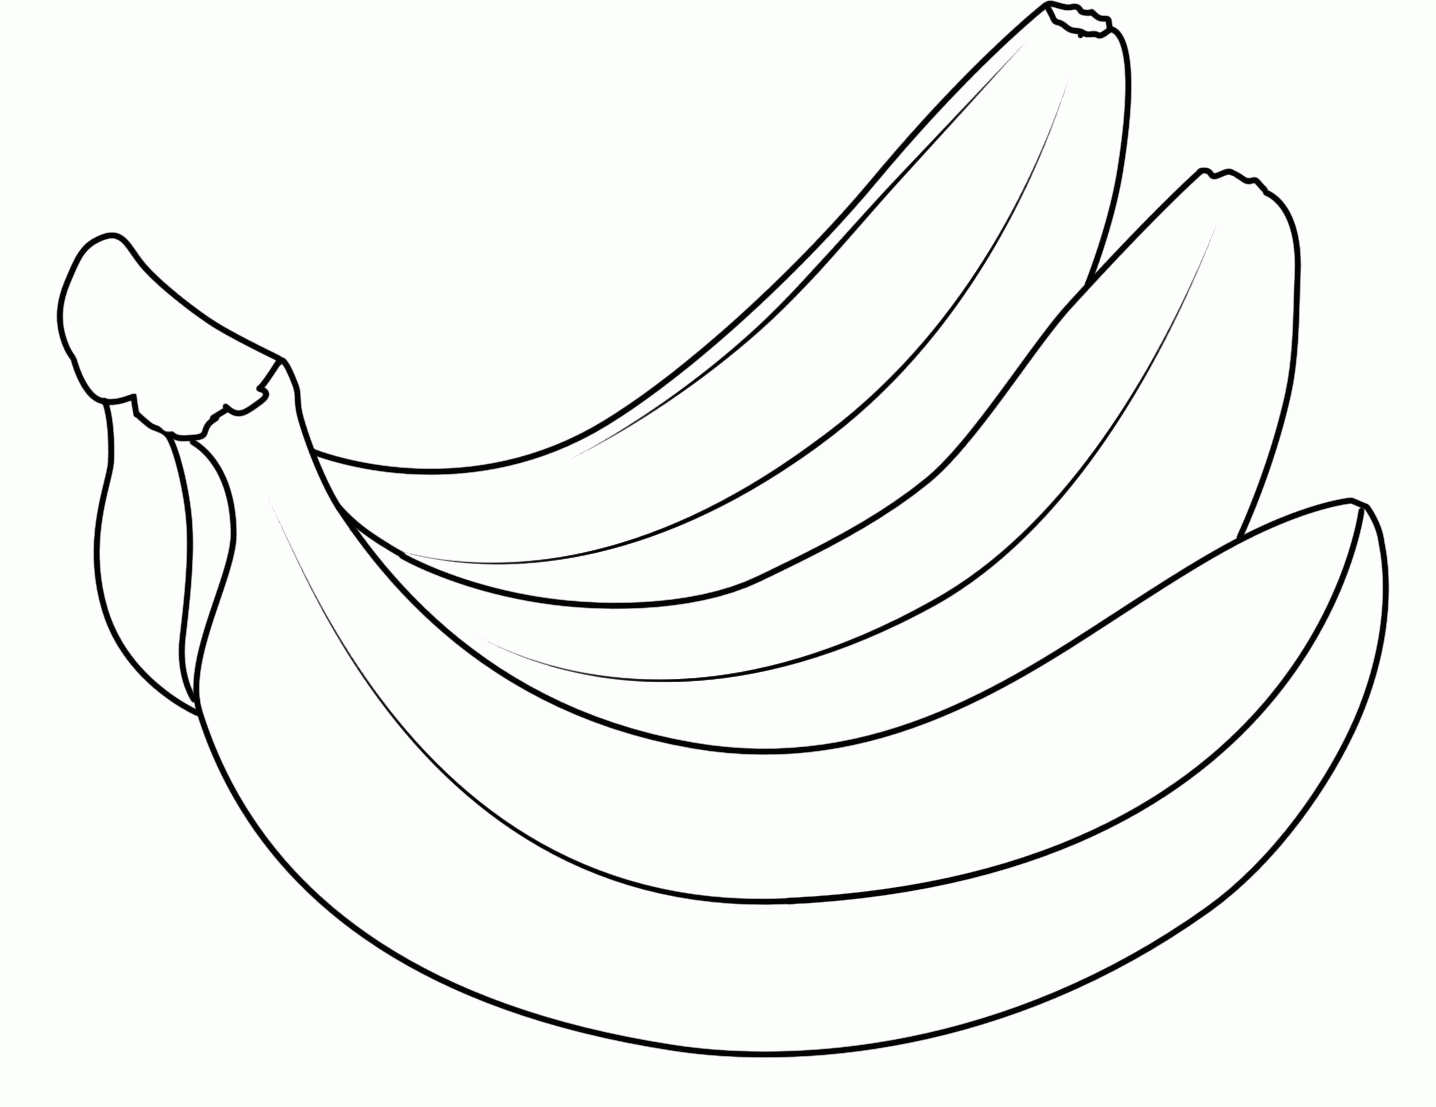 Banana clipart outline, Banana outline Transparent FREE for.